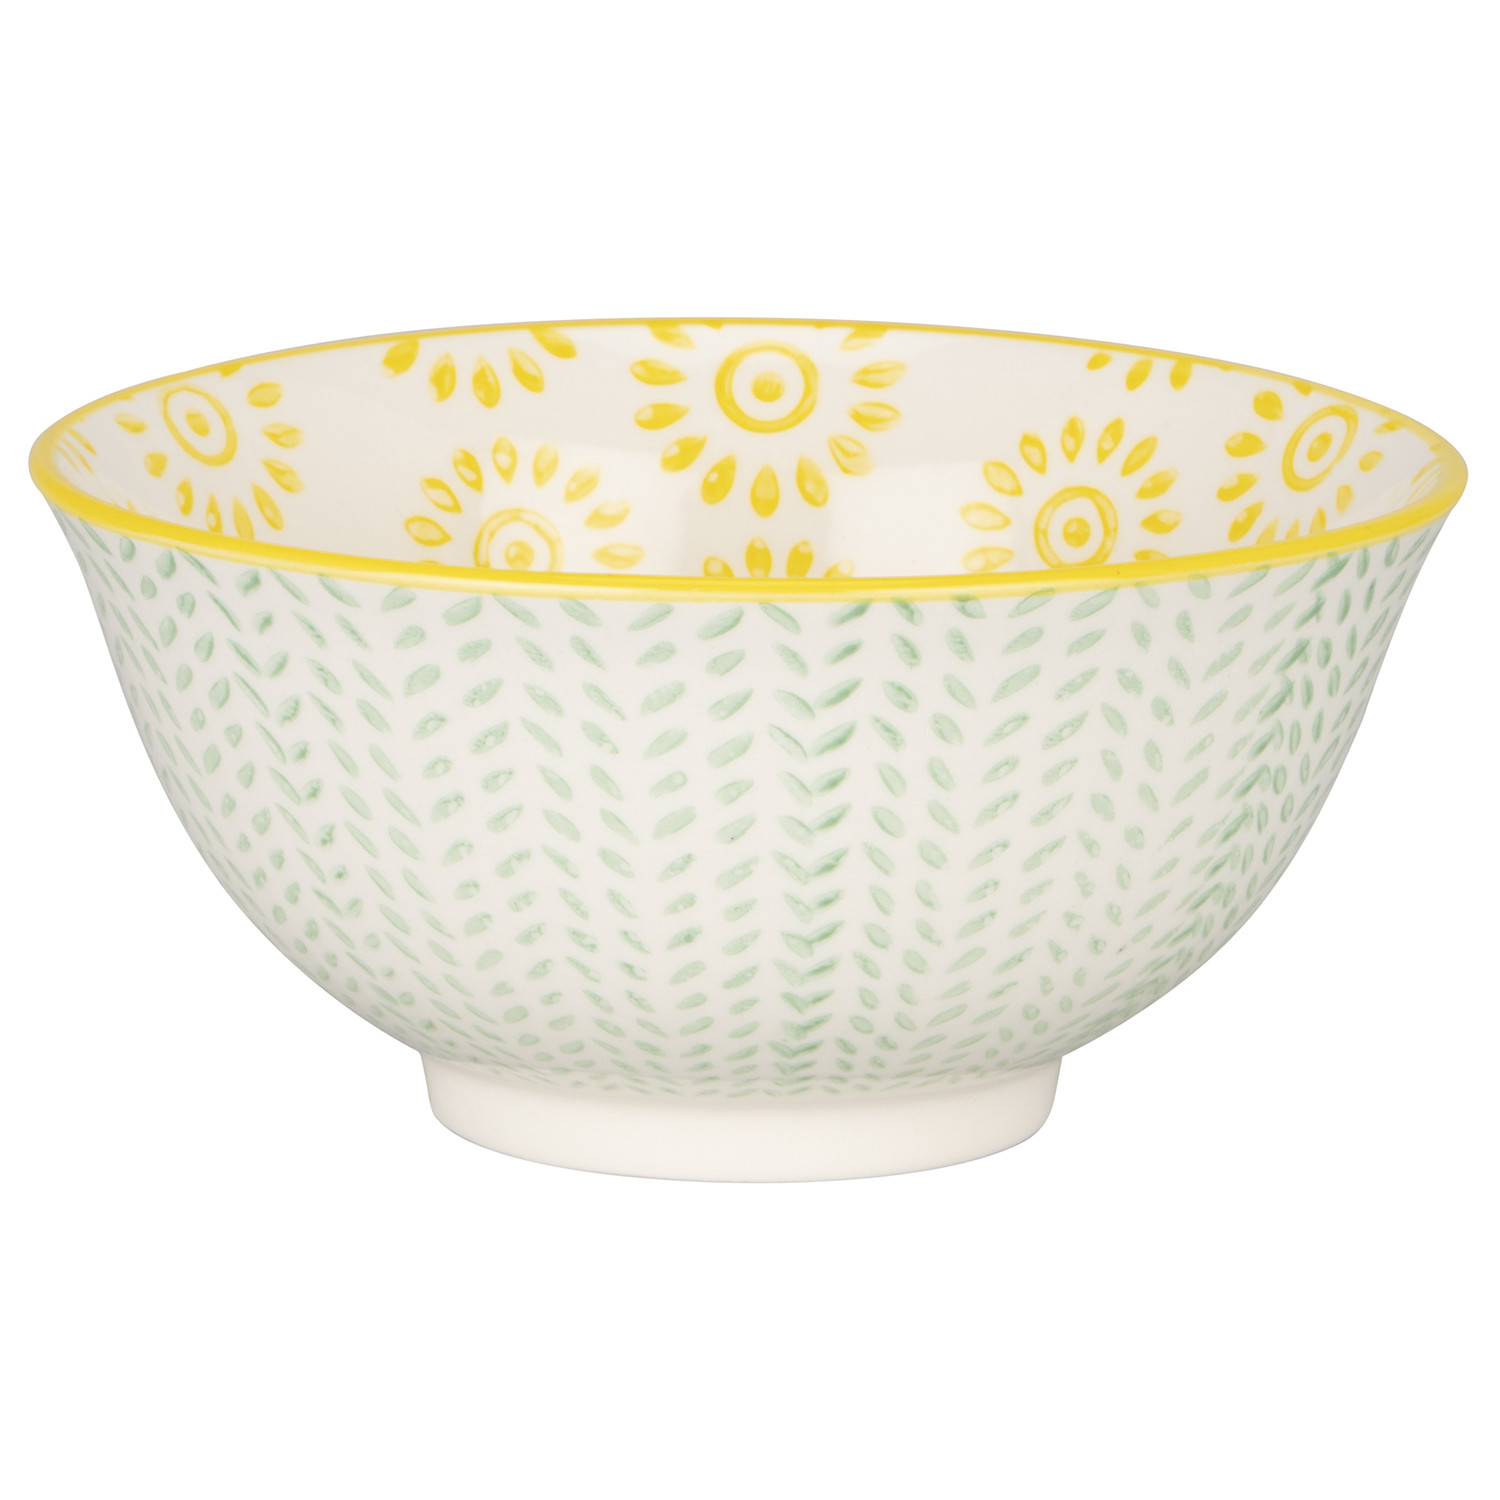 Amari Bowl - Green & Yellow / Medium Image 1